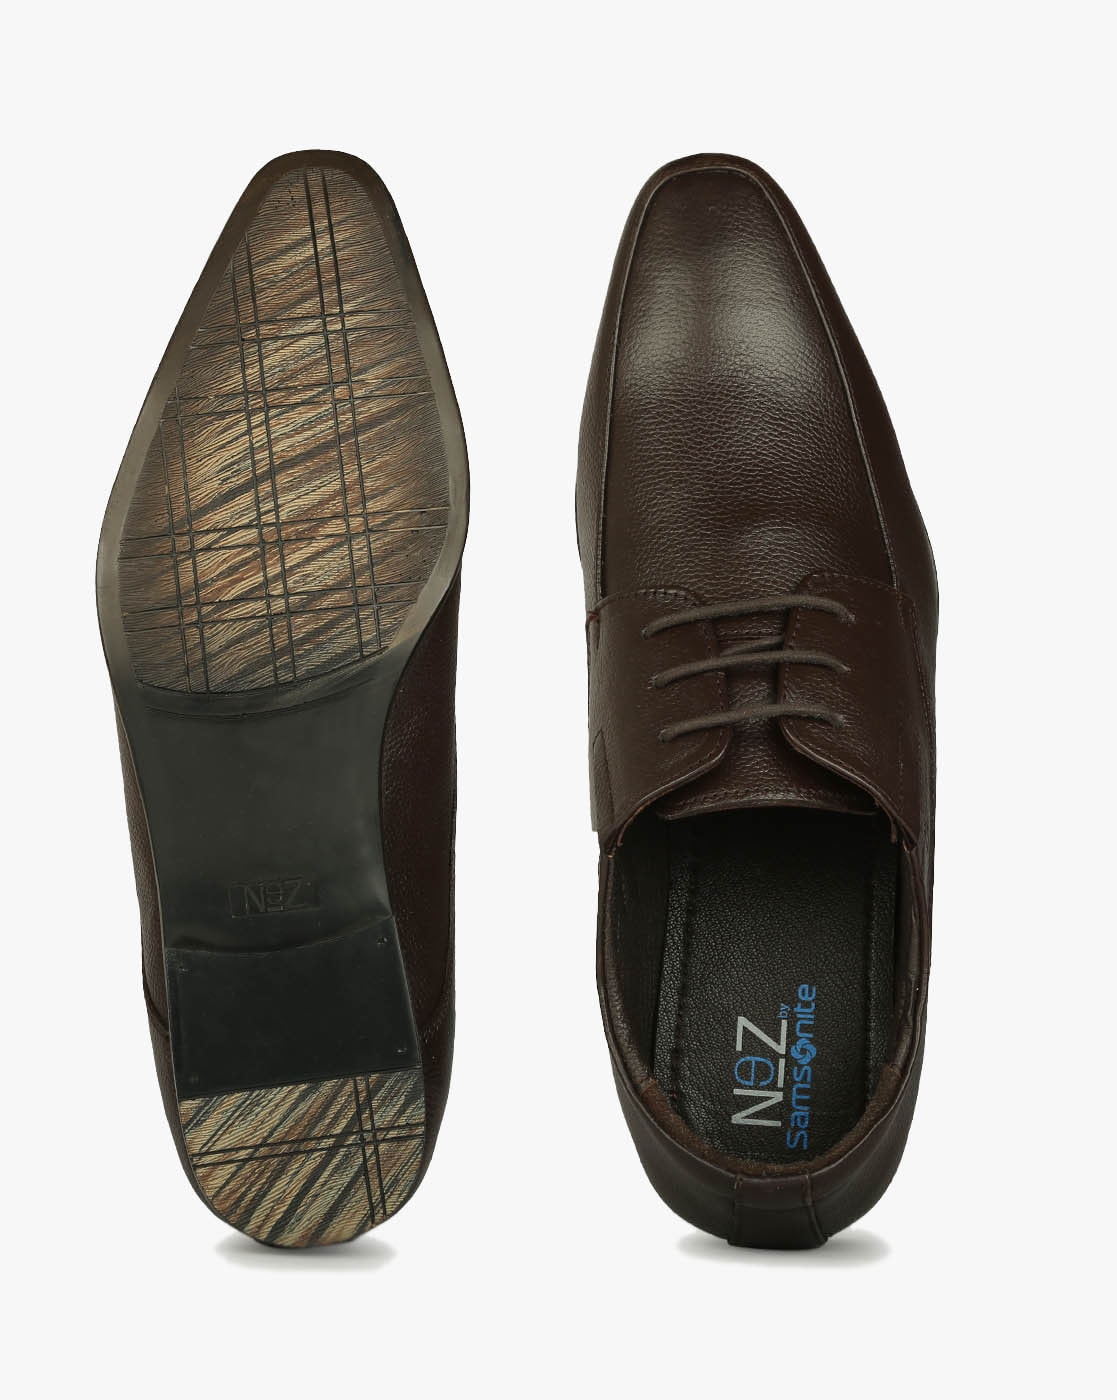 SAMSONITE Shoes for Men - Vestiaire Collective